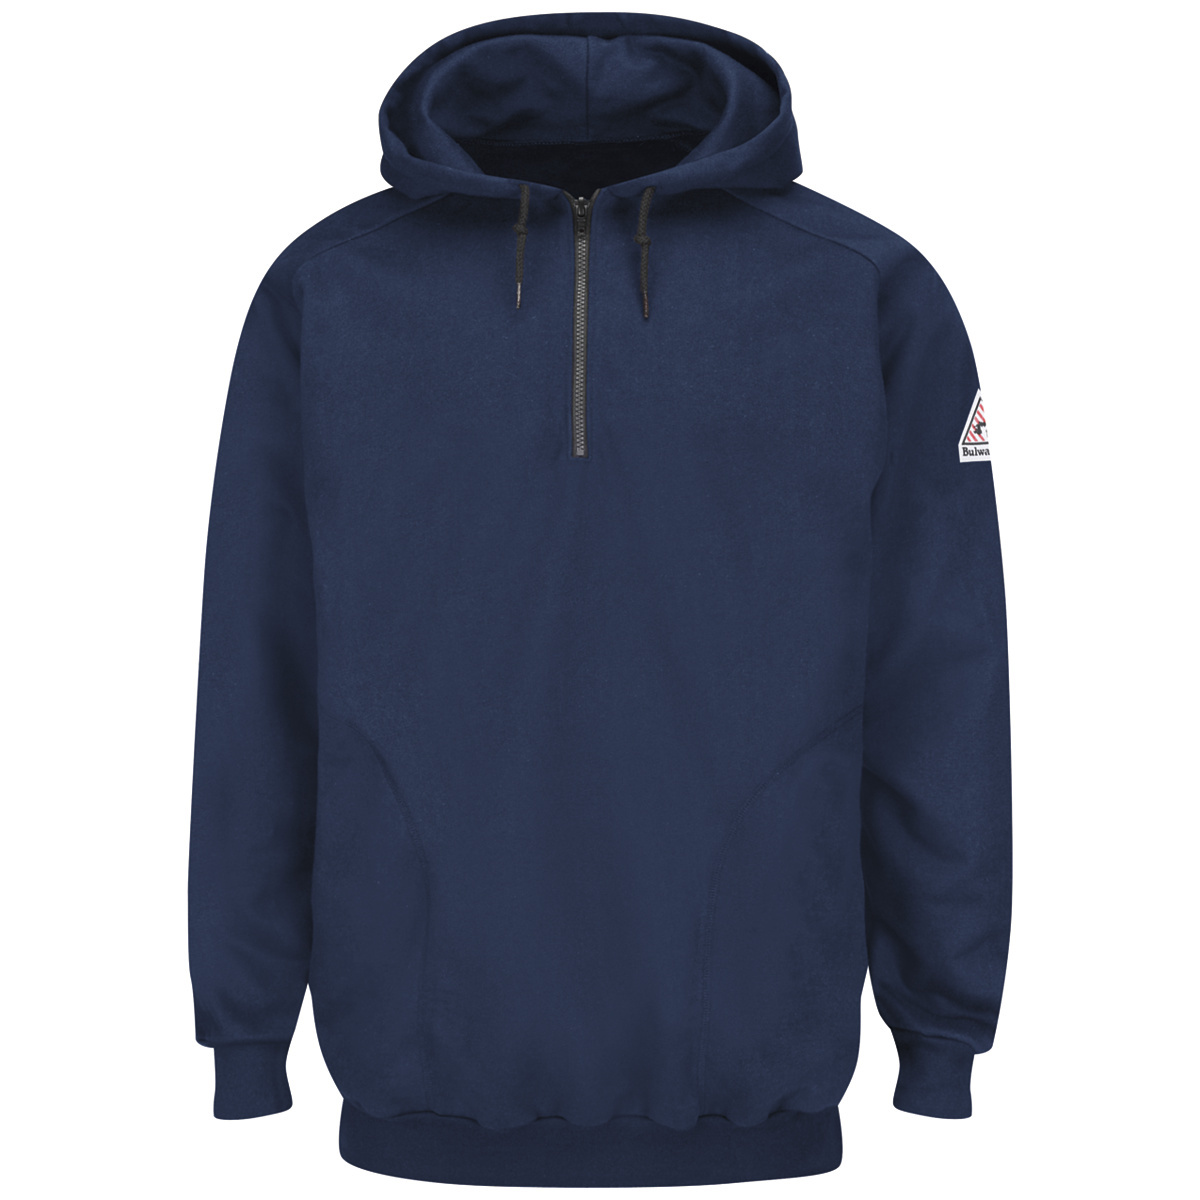 Bulwark® 3X Tall Navy Blue Cotton/Spandex Brushed Fleece Flame Resistant Hooded Sweatshirt